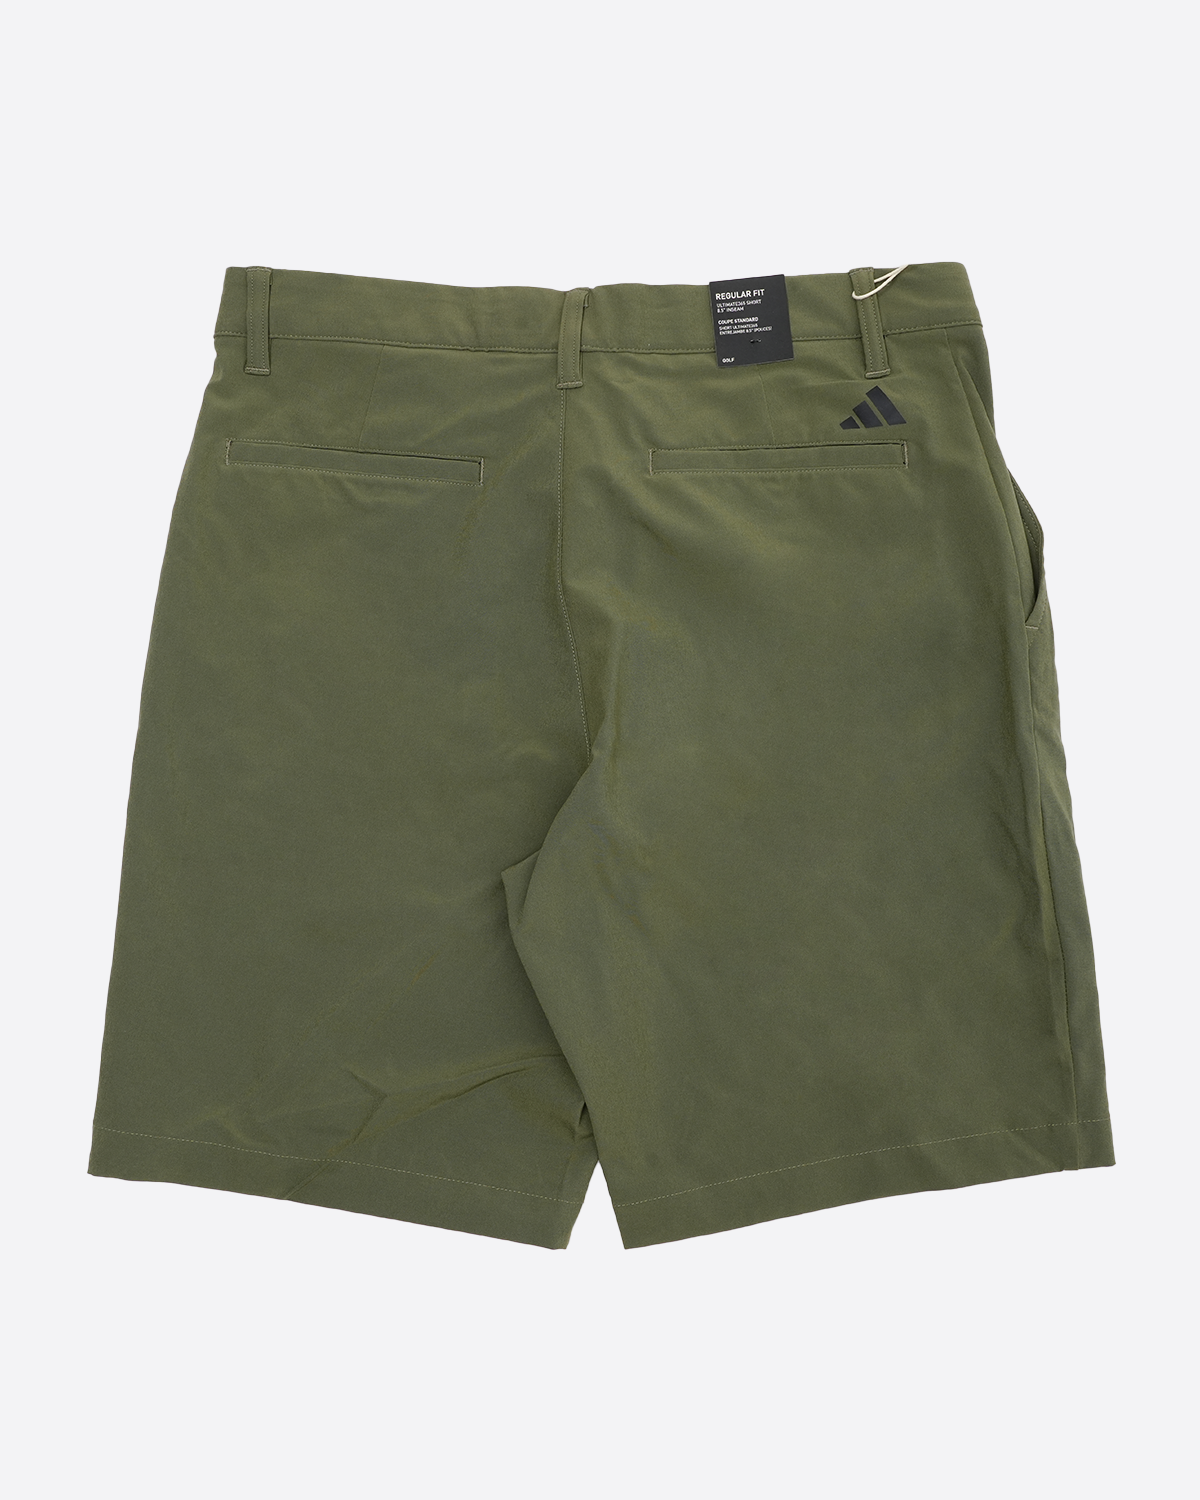 Adidas x GGC - Ult 8.5in Shorts - Olive